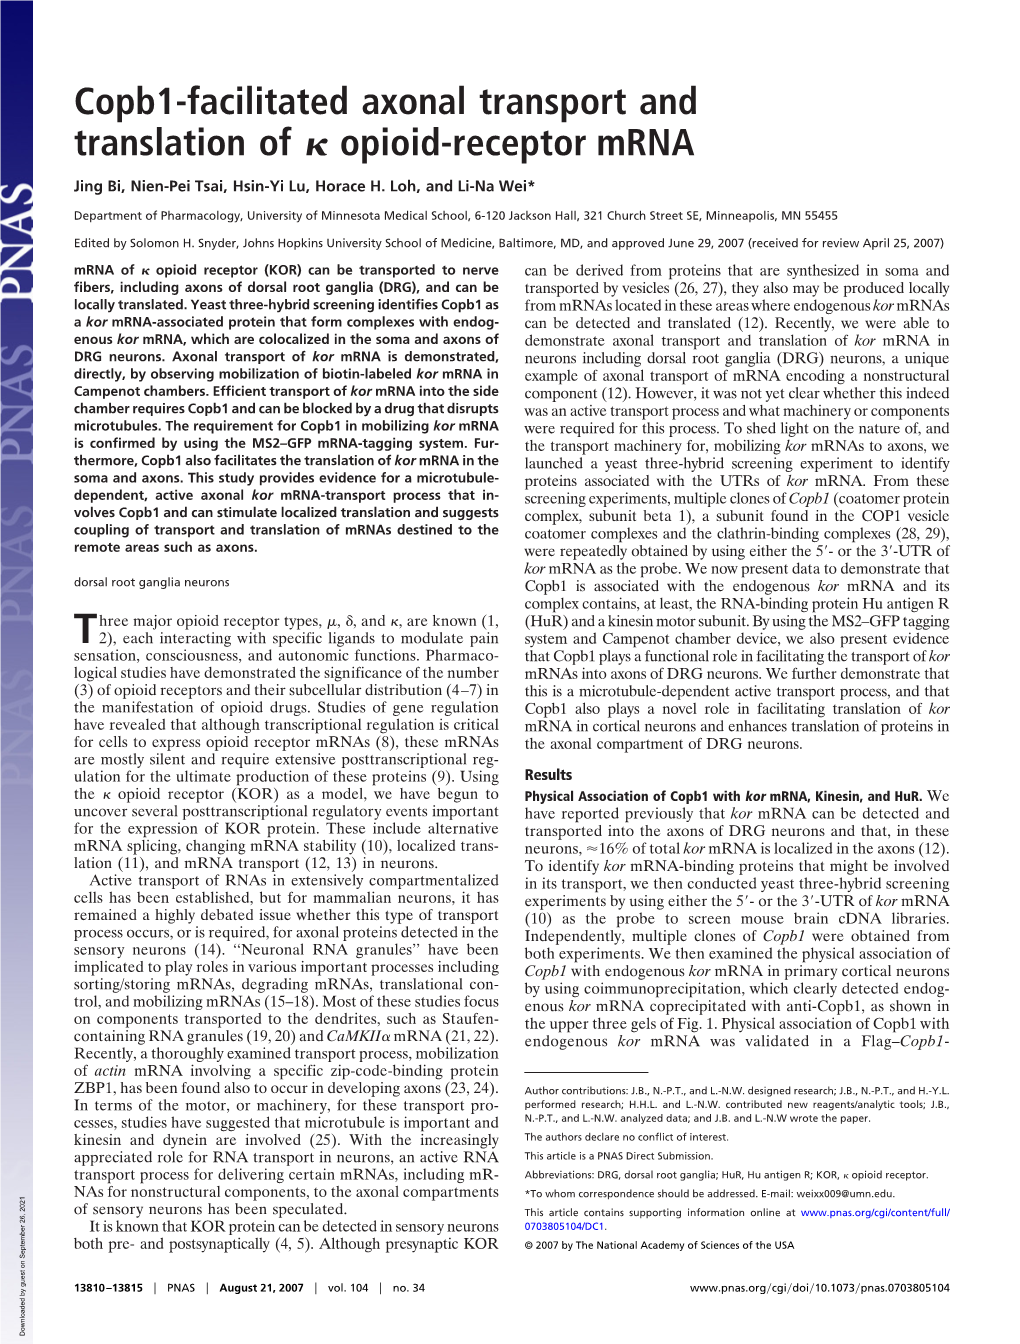 Copb1-Facilitated Axonal Transport and Translation of Opioid-Receptor Mrna